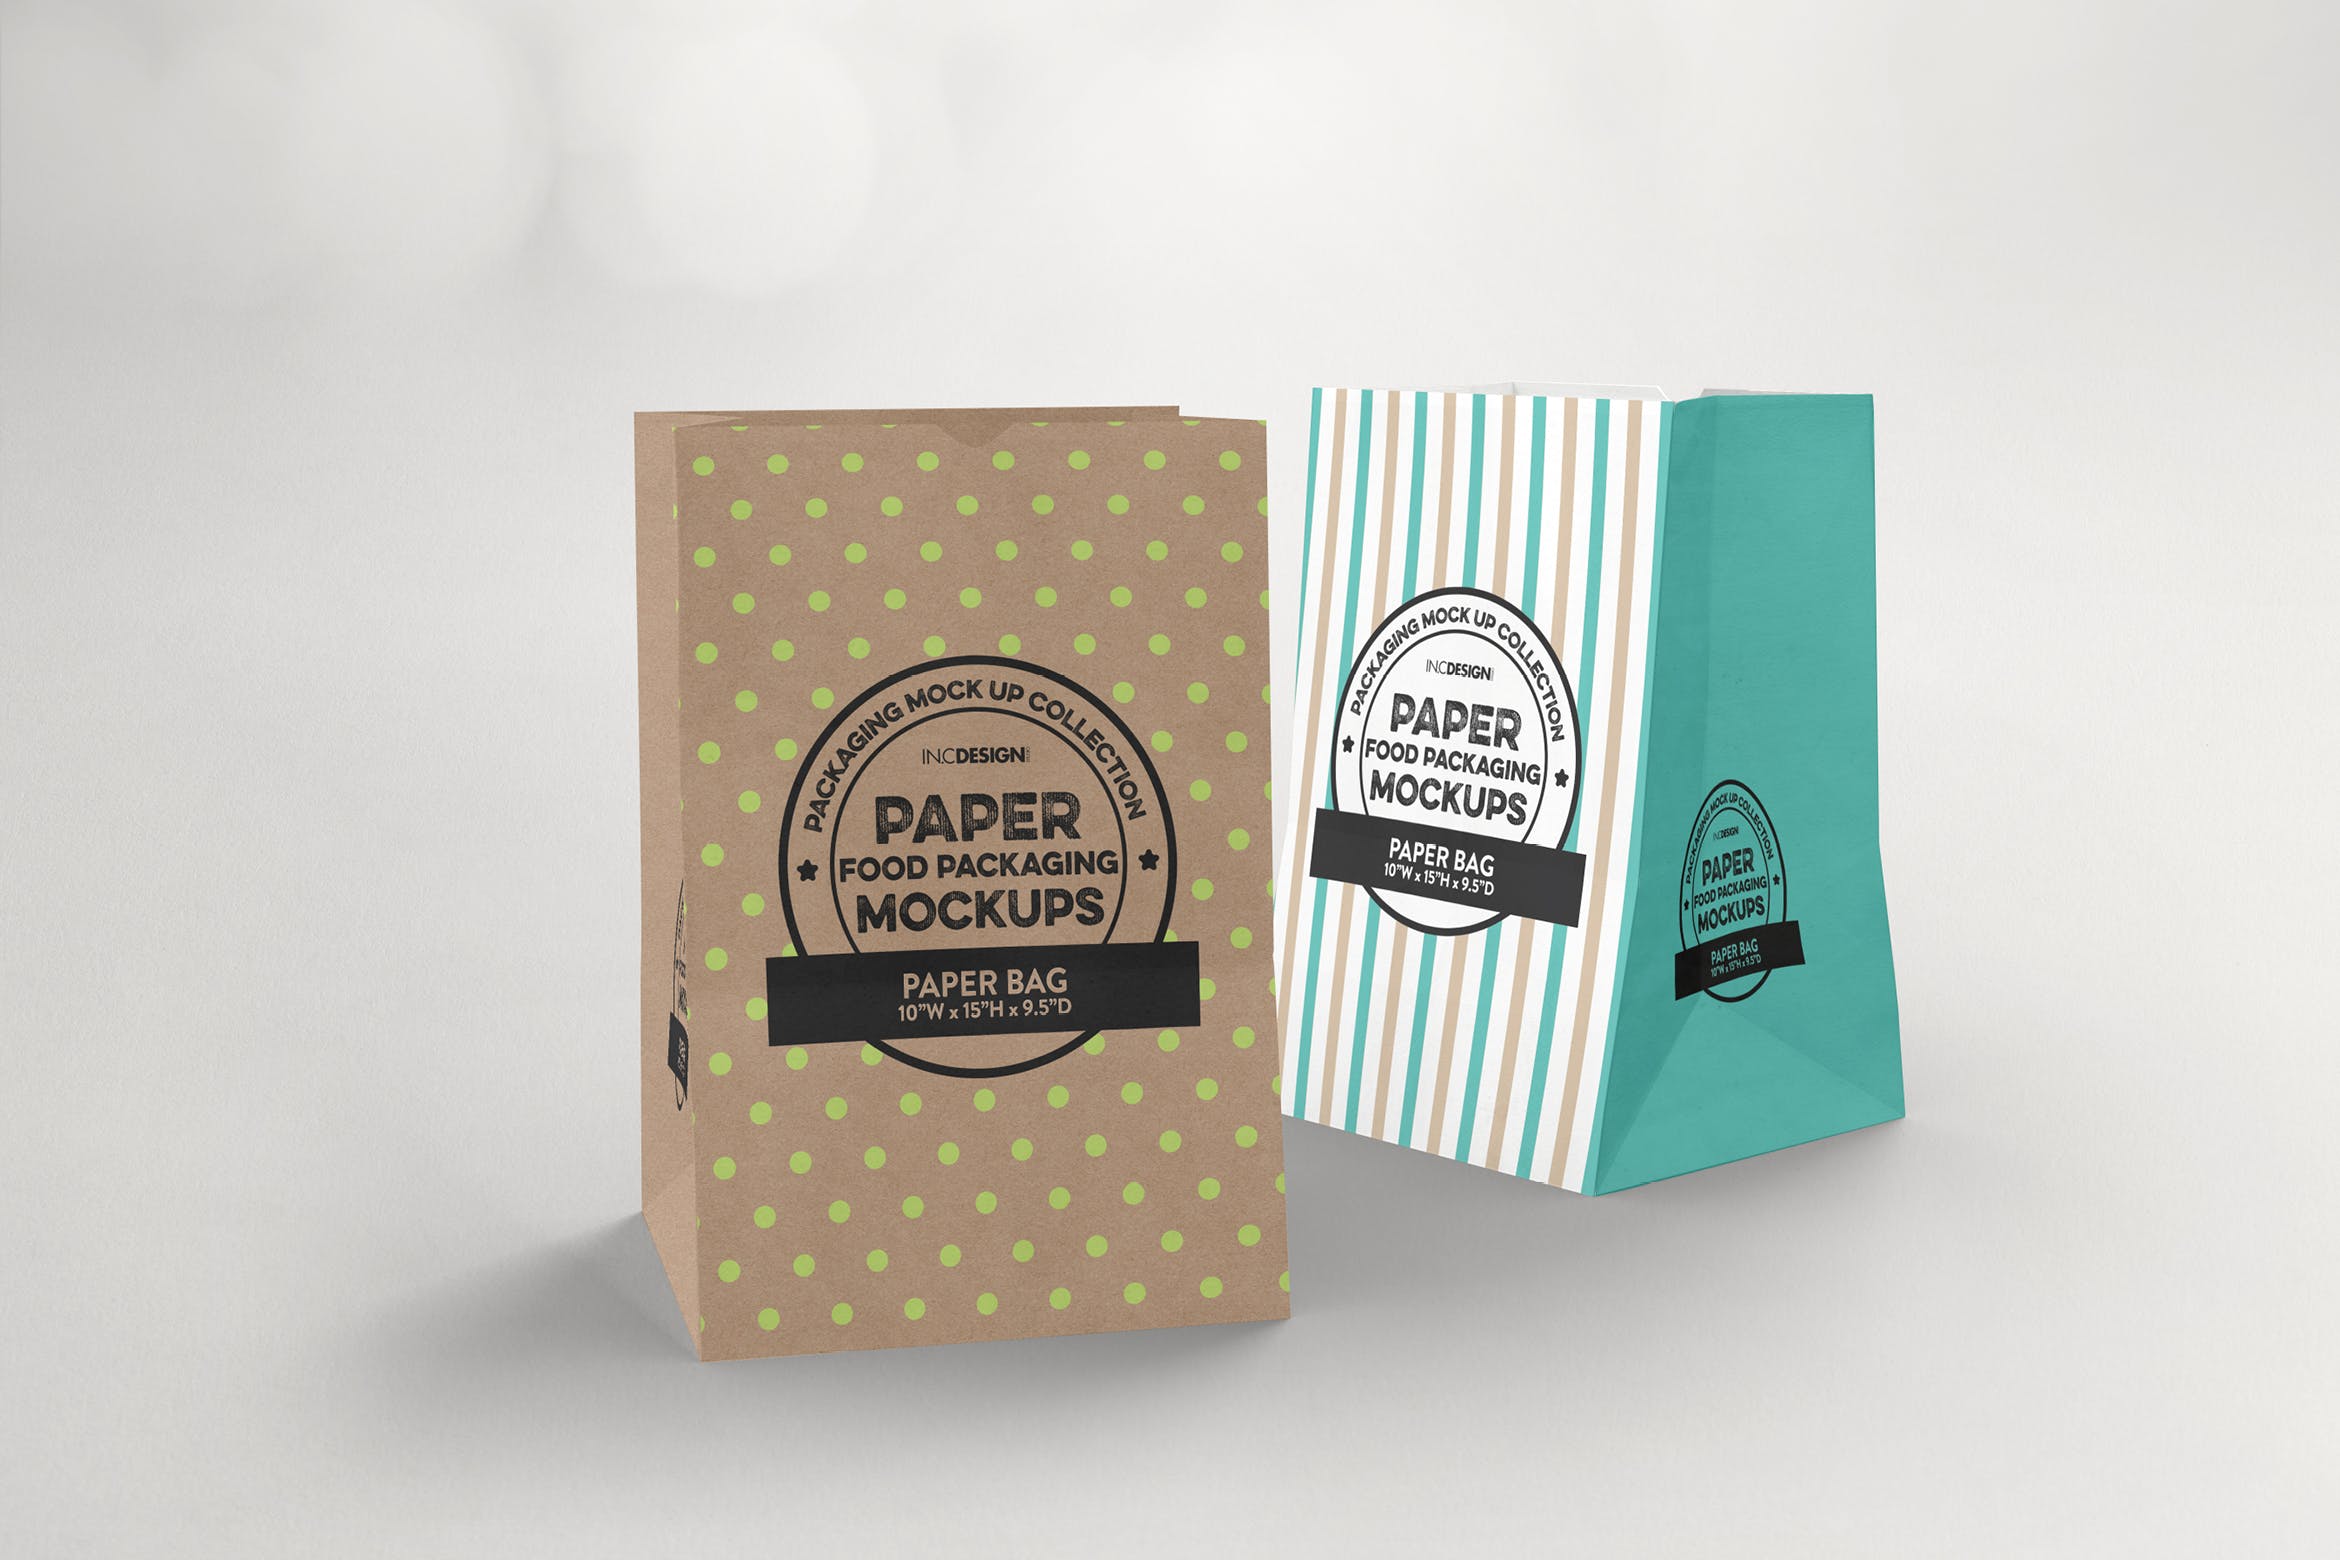 杂货纸袋包装设计效果图素材库精选 Grocery Paper Bags Packaging Mockup插图